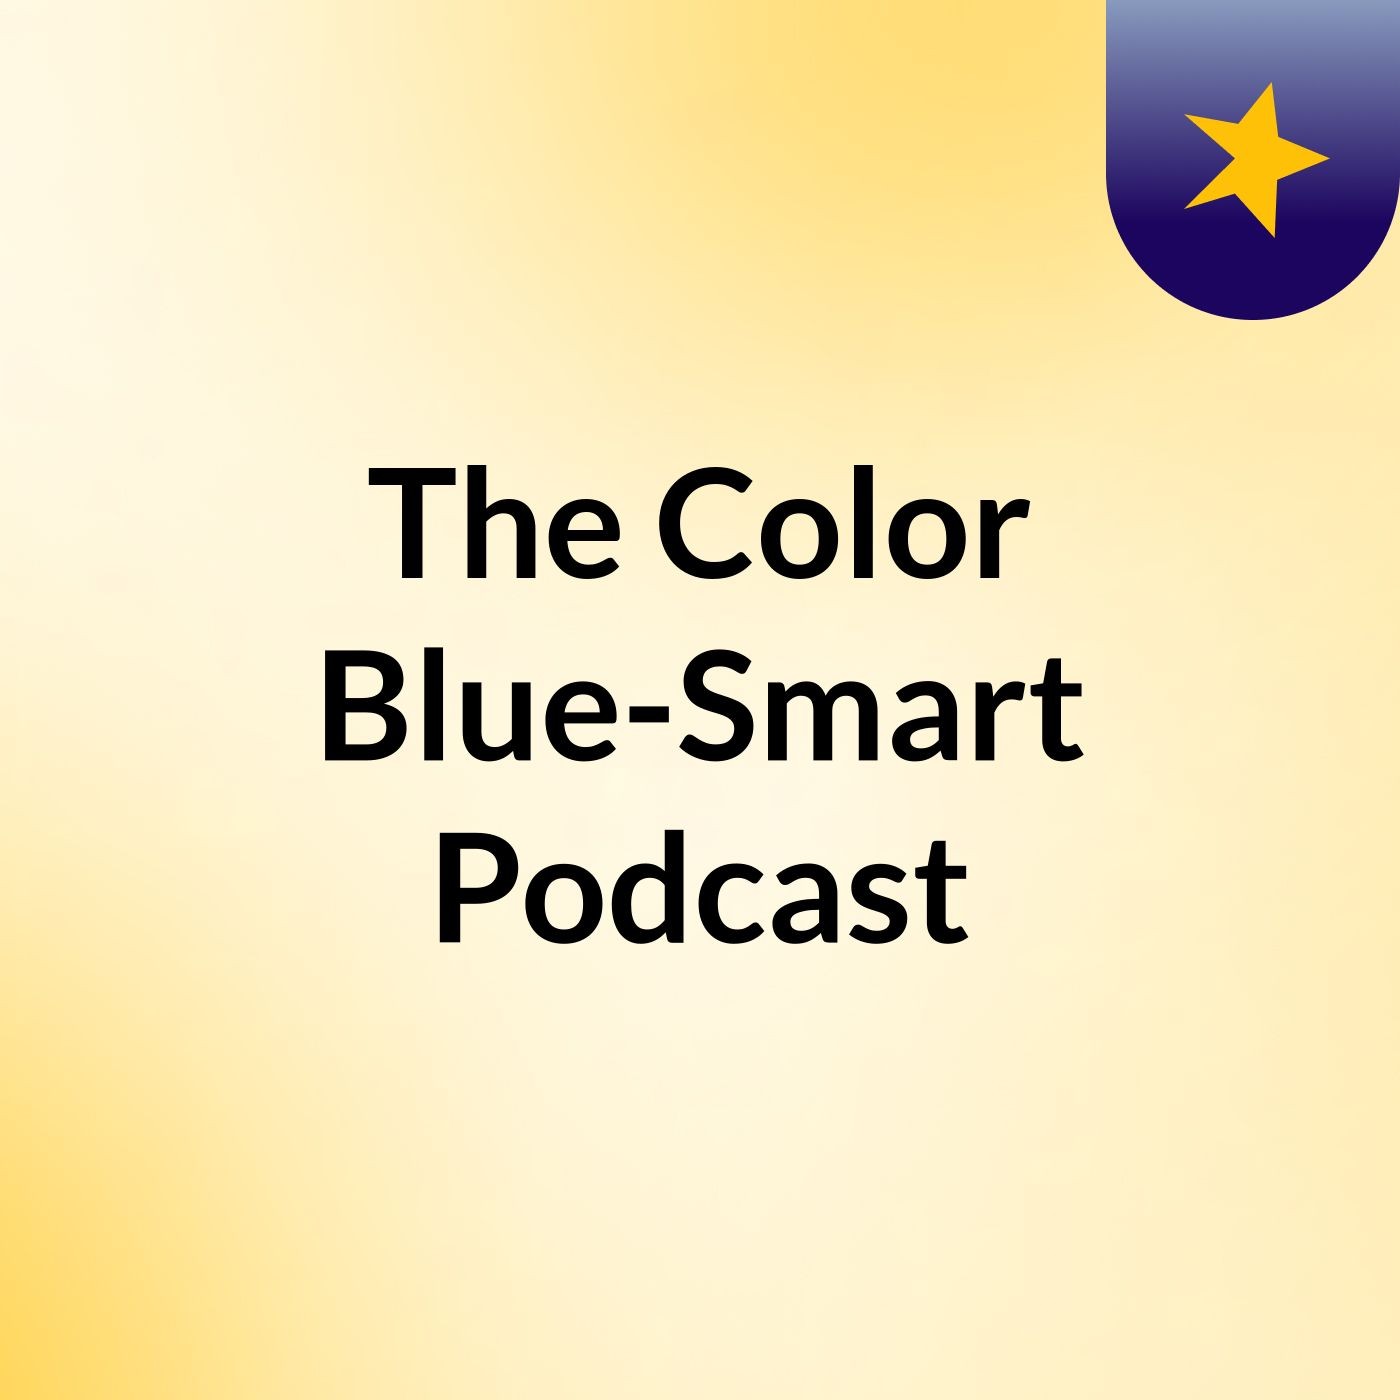 Show Content - The Color Blue-Smart Podcast